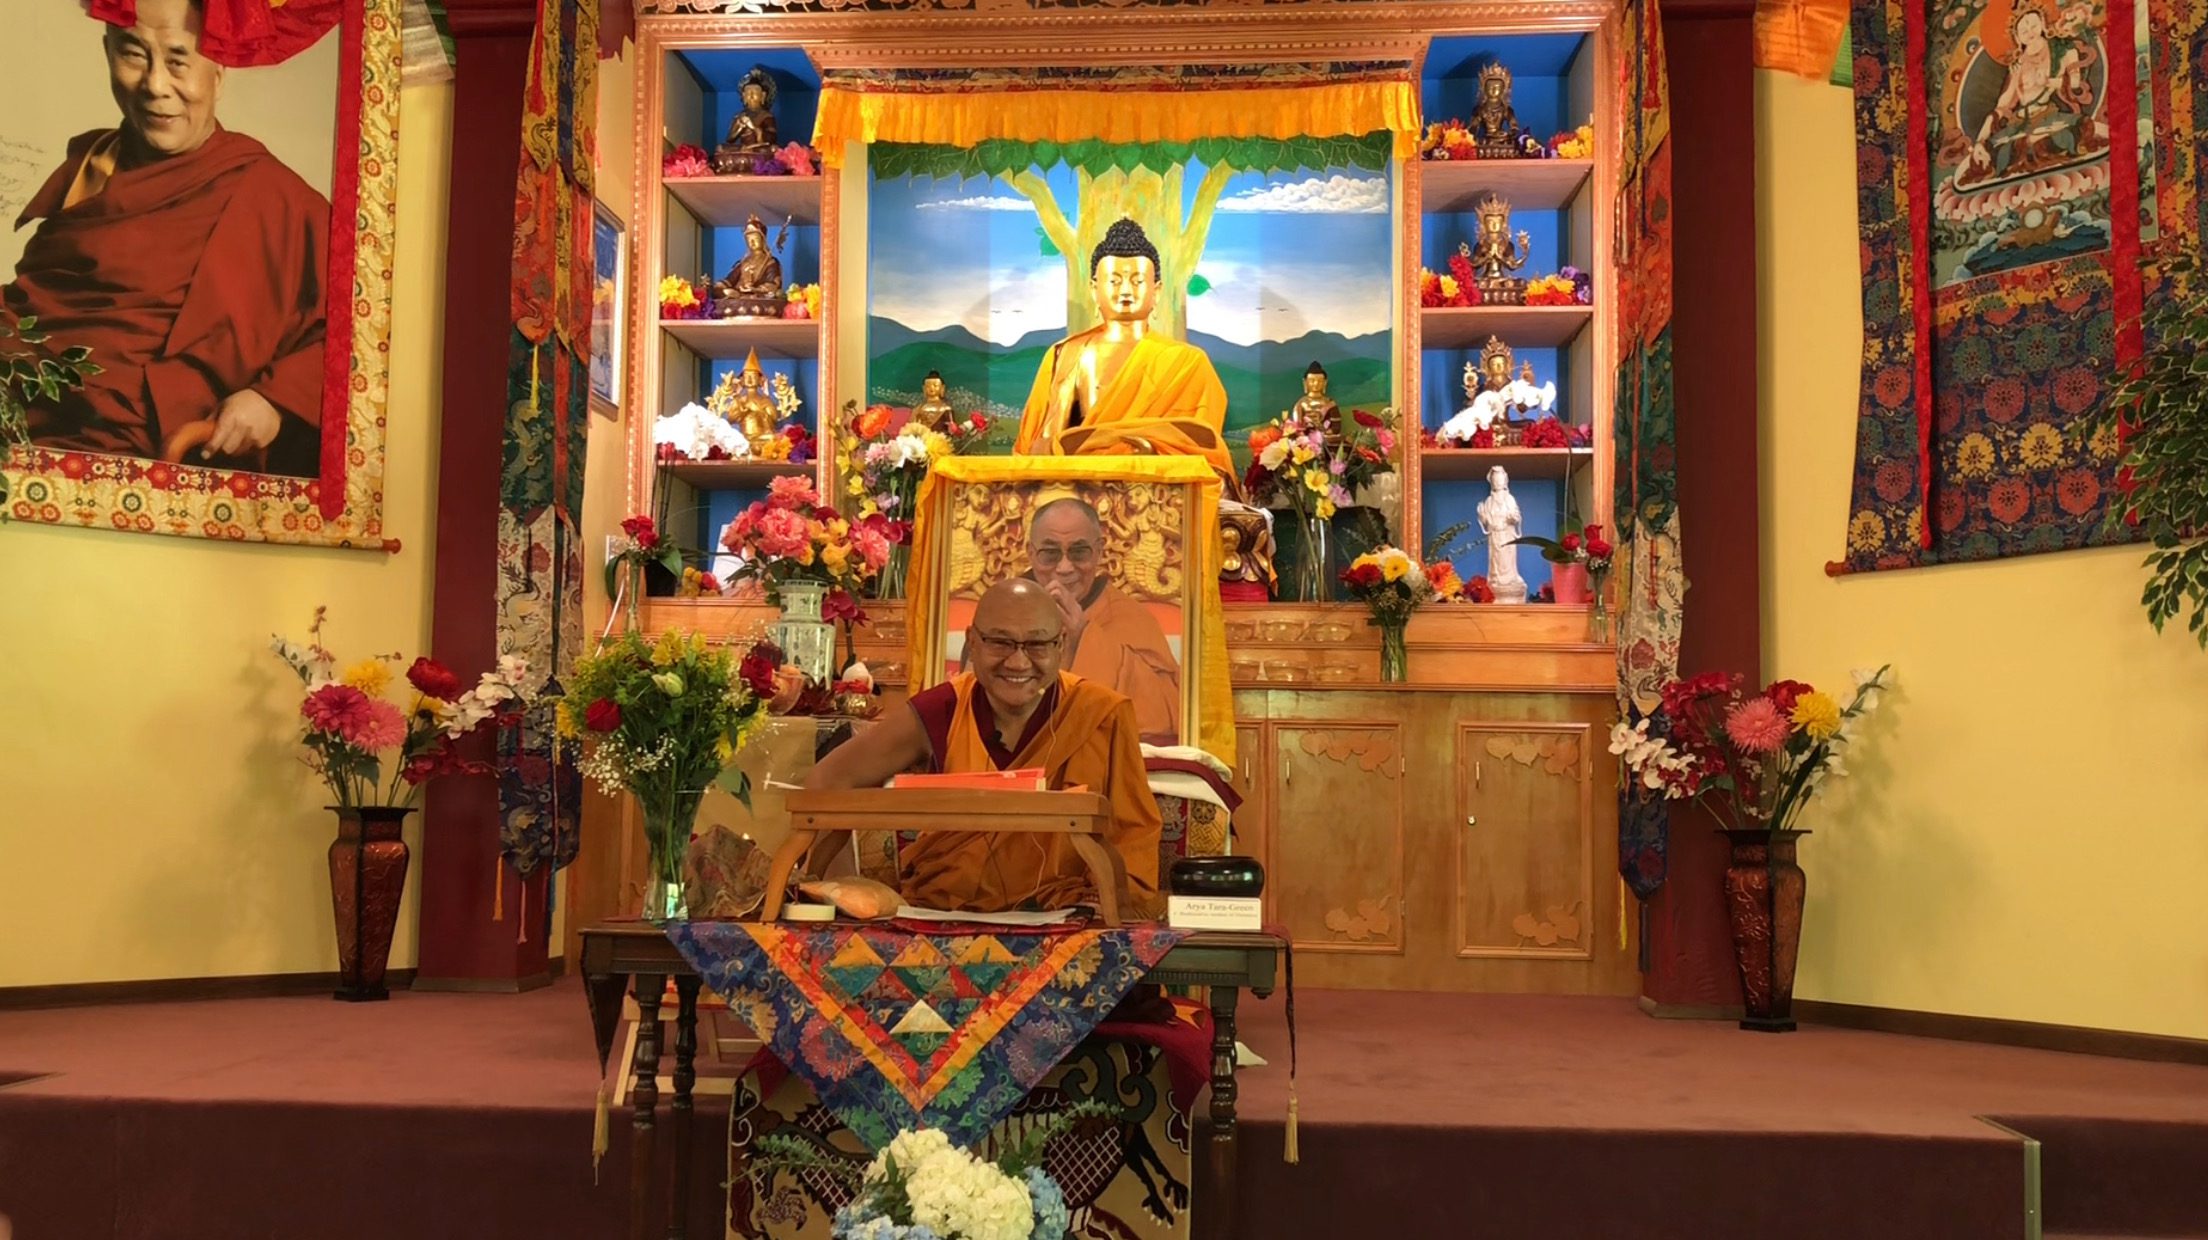 Geshe-la Phelgye Buddhist Institute of Universal Compassion